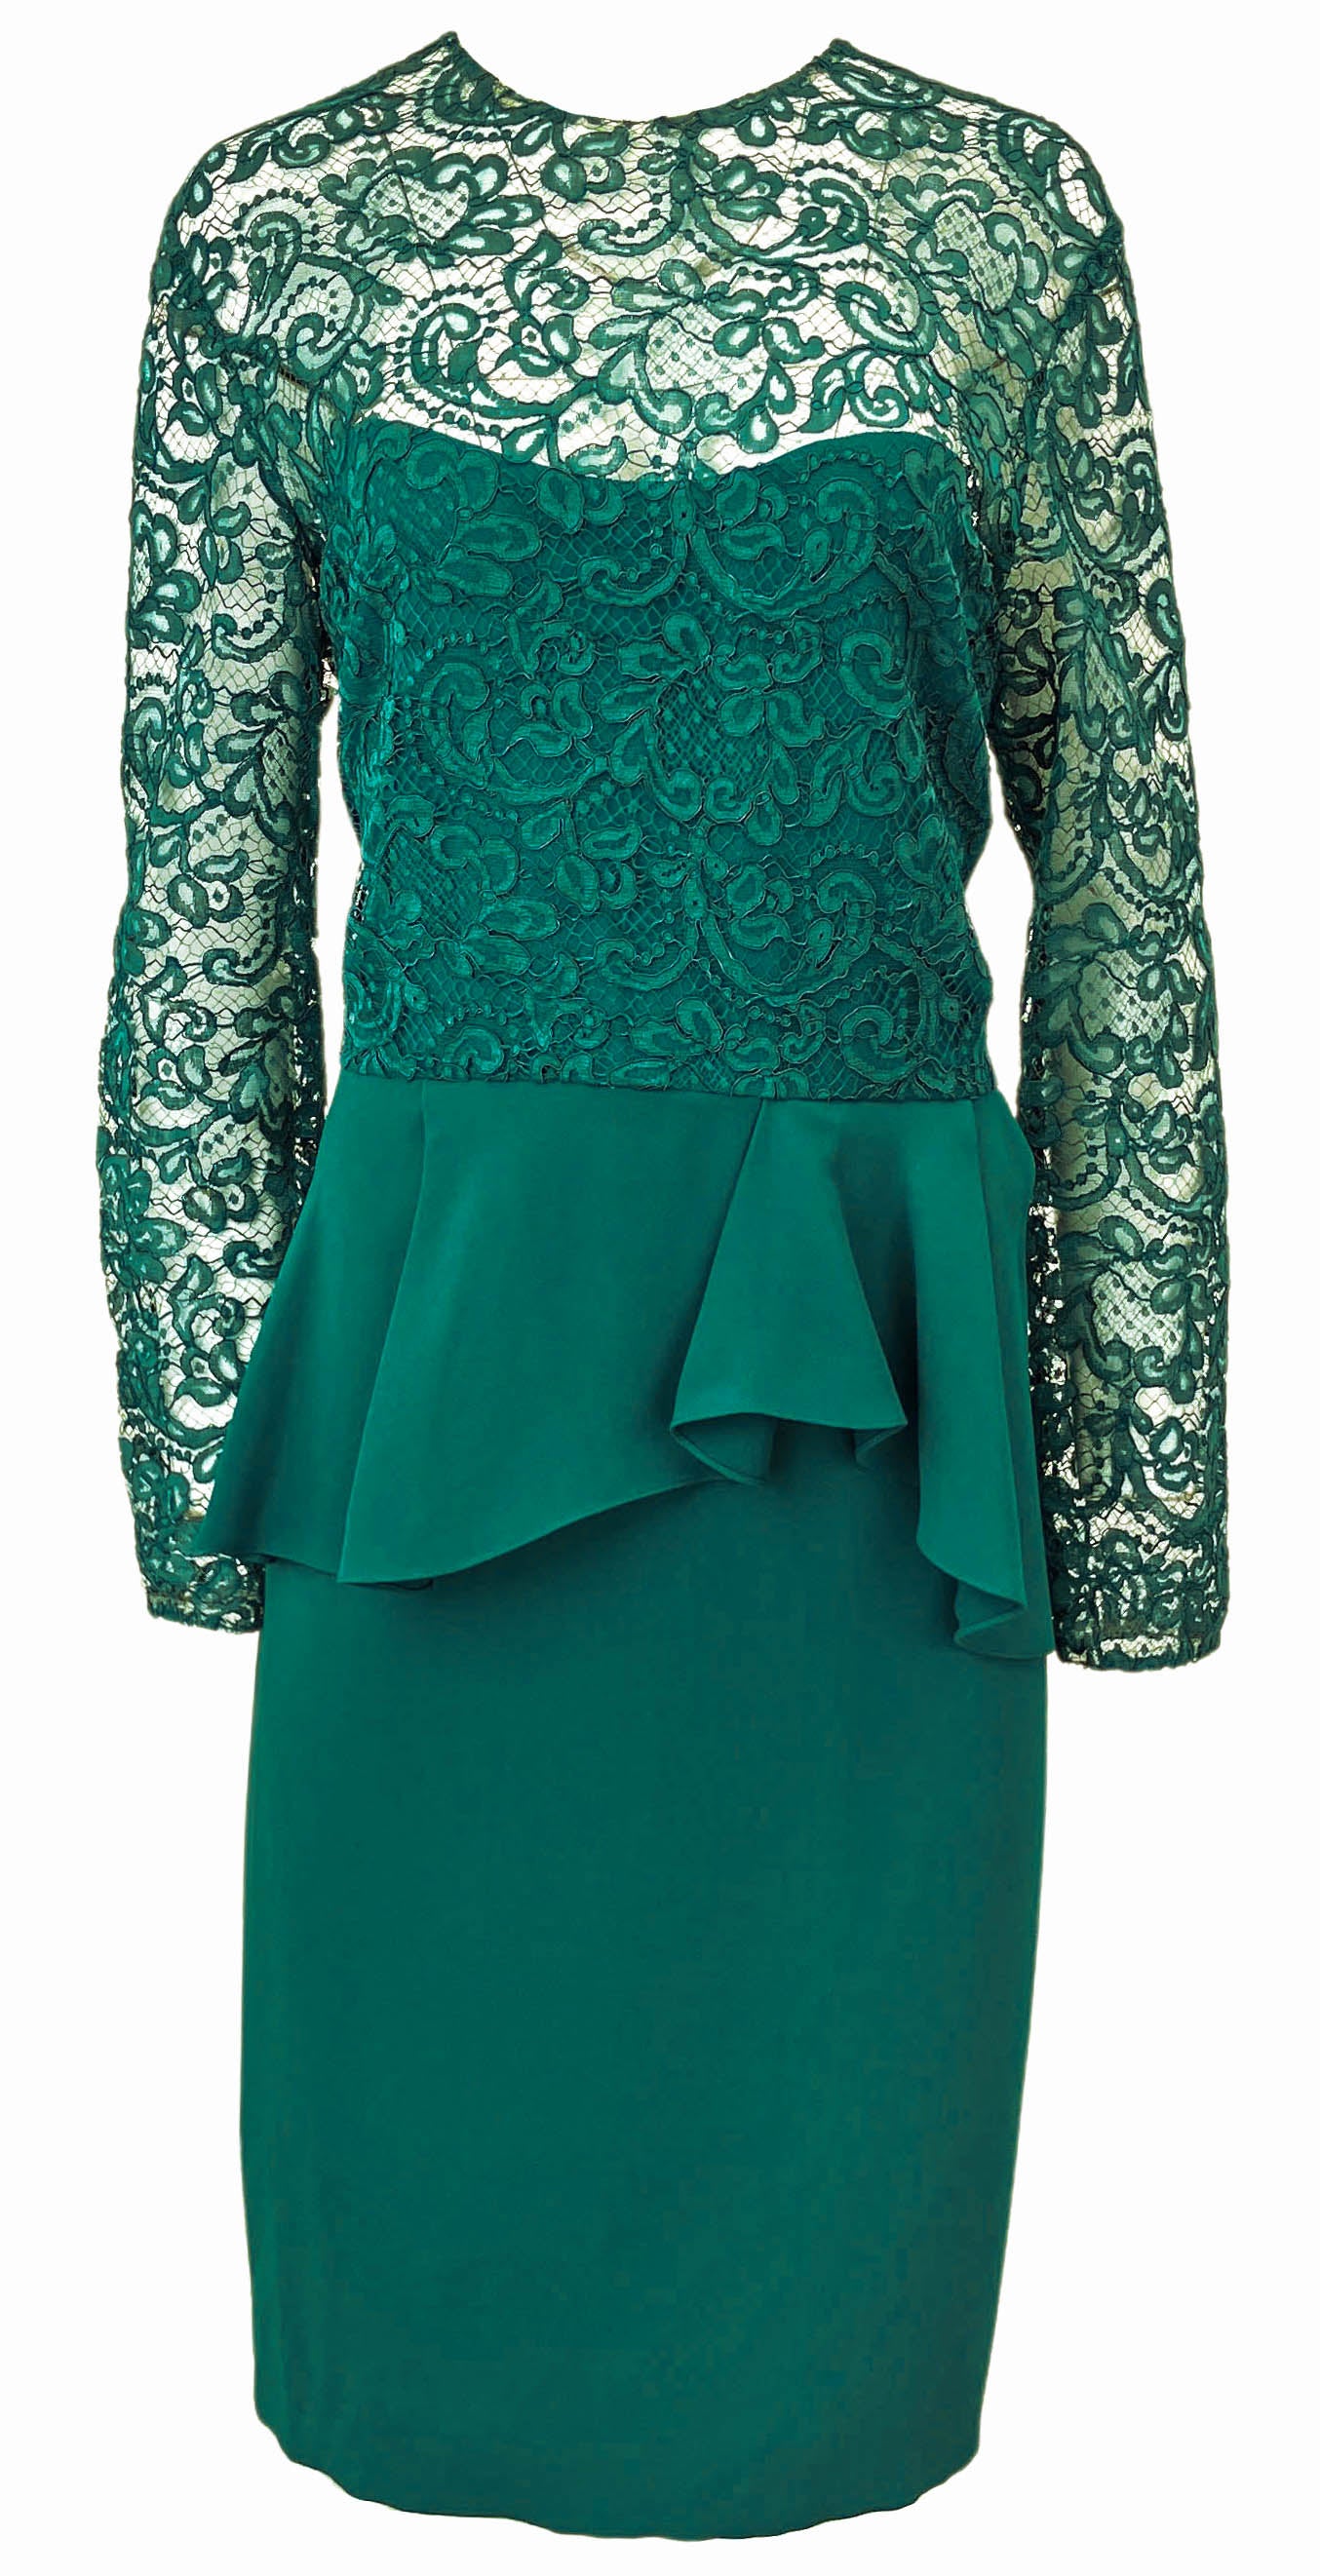 Reem Acra Long Sleeve Midi Dress in Emerald - Discounts on Reem Acra at UAL